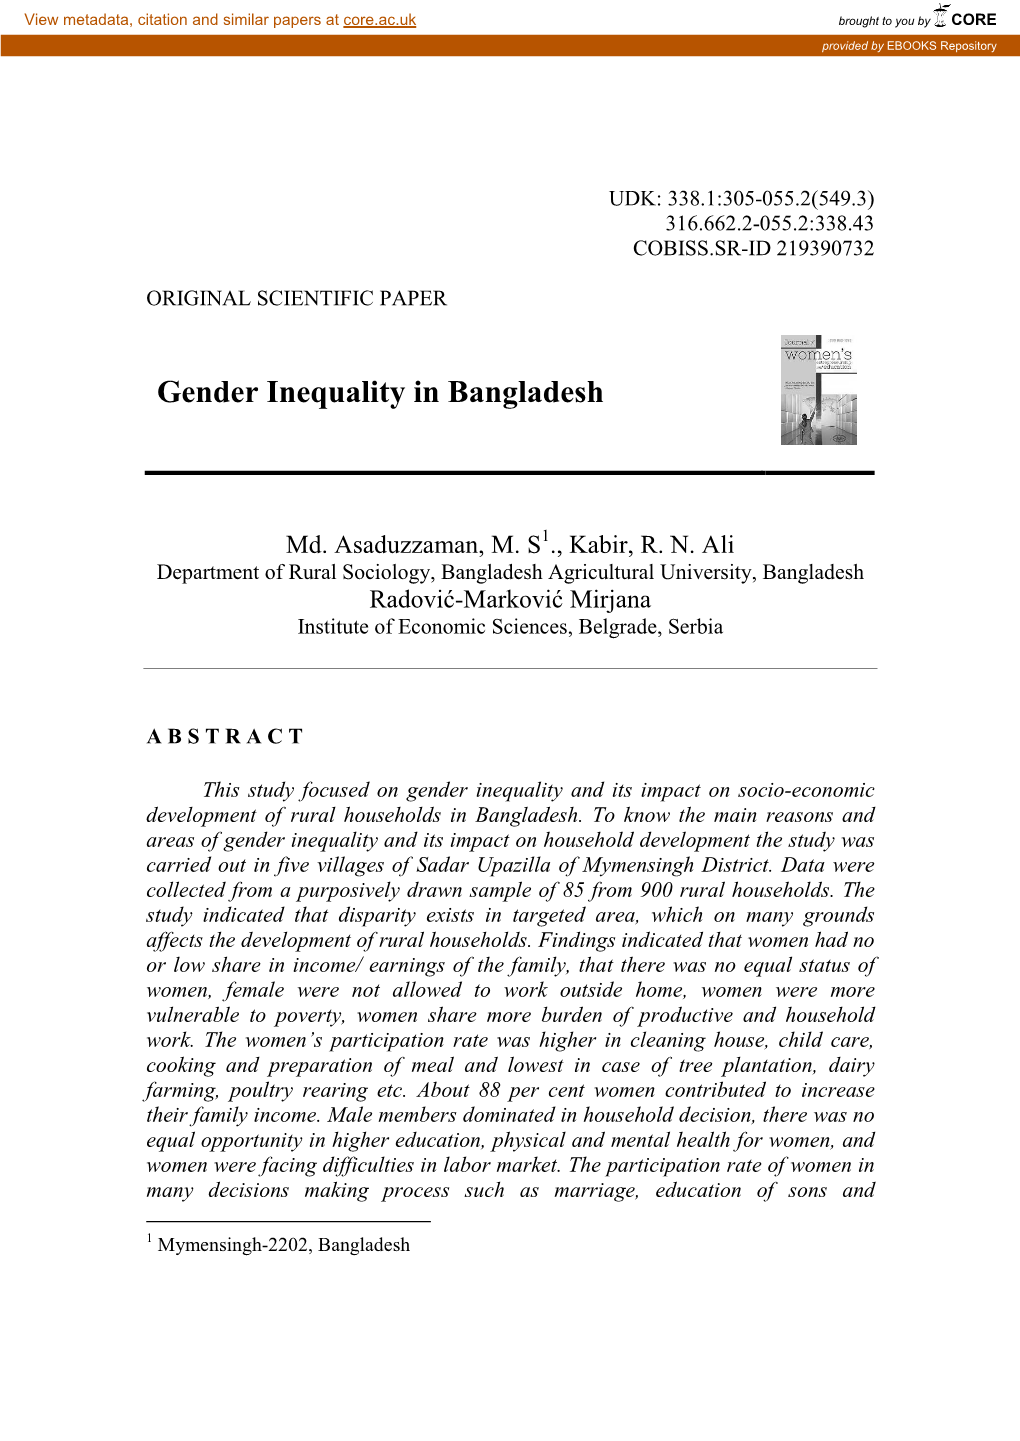 Gender Inequality in Bangladesh